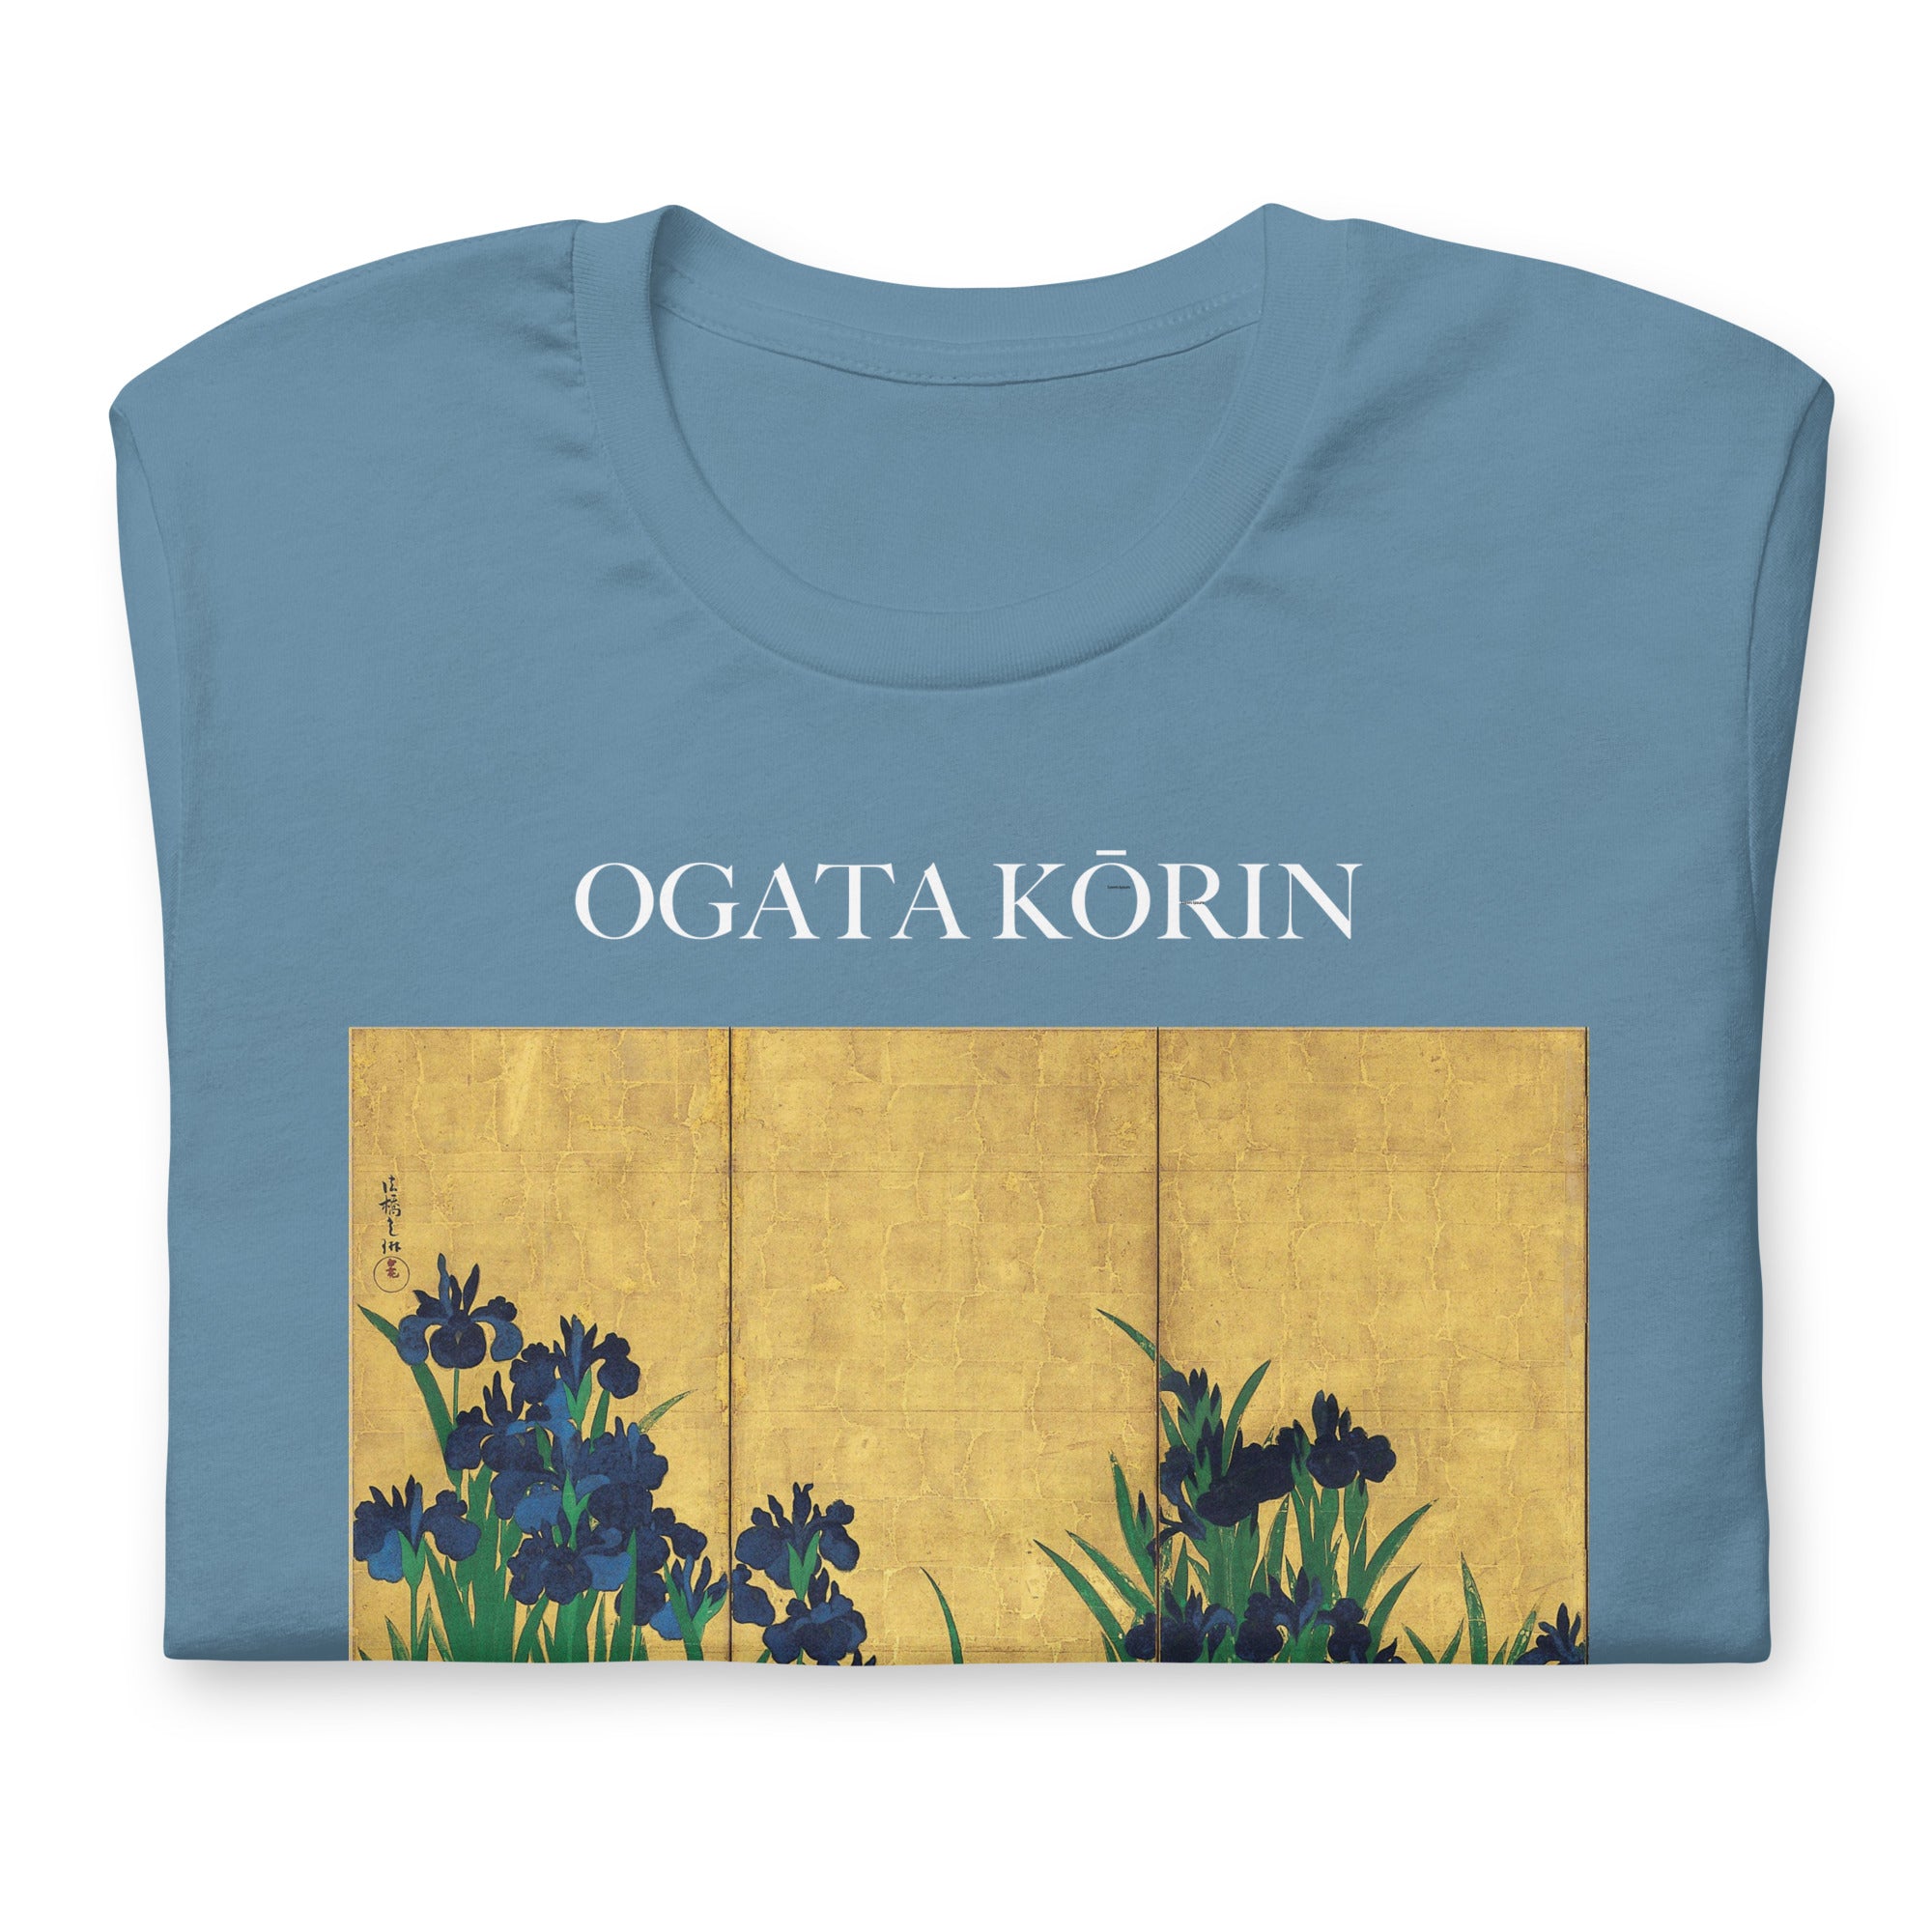 Ogata Kōrin 'Irises Screen' Berühmtes Gemälde T-Shirt | Unisex Klassisches Kunst T-Shirt